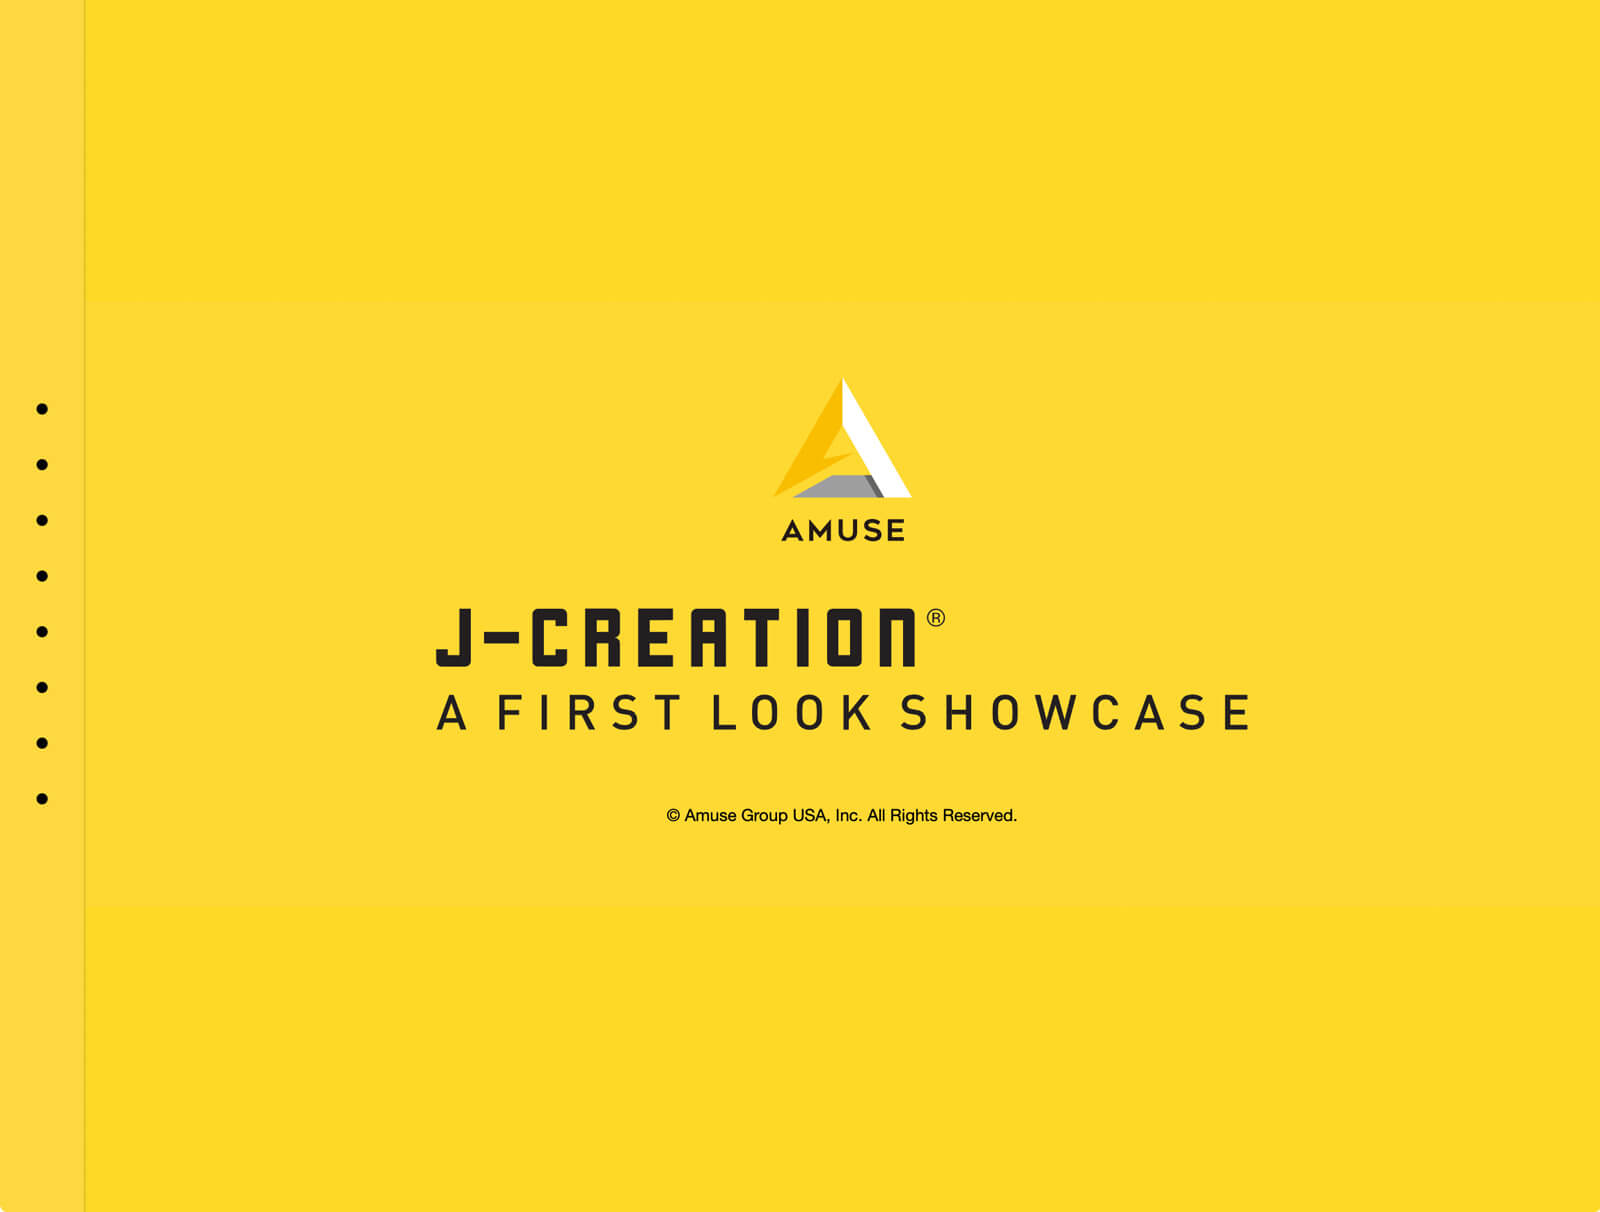 J-CREATION